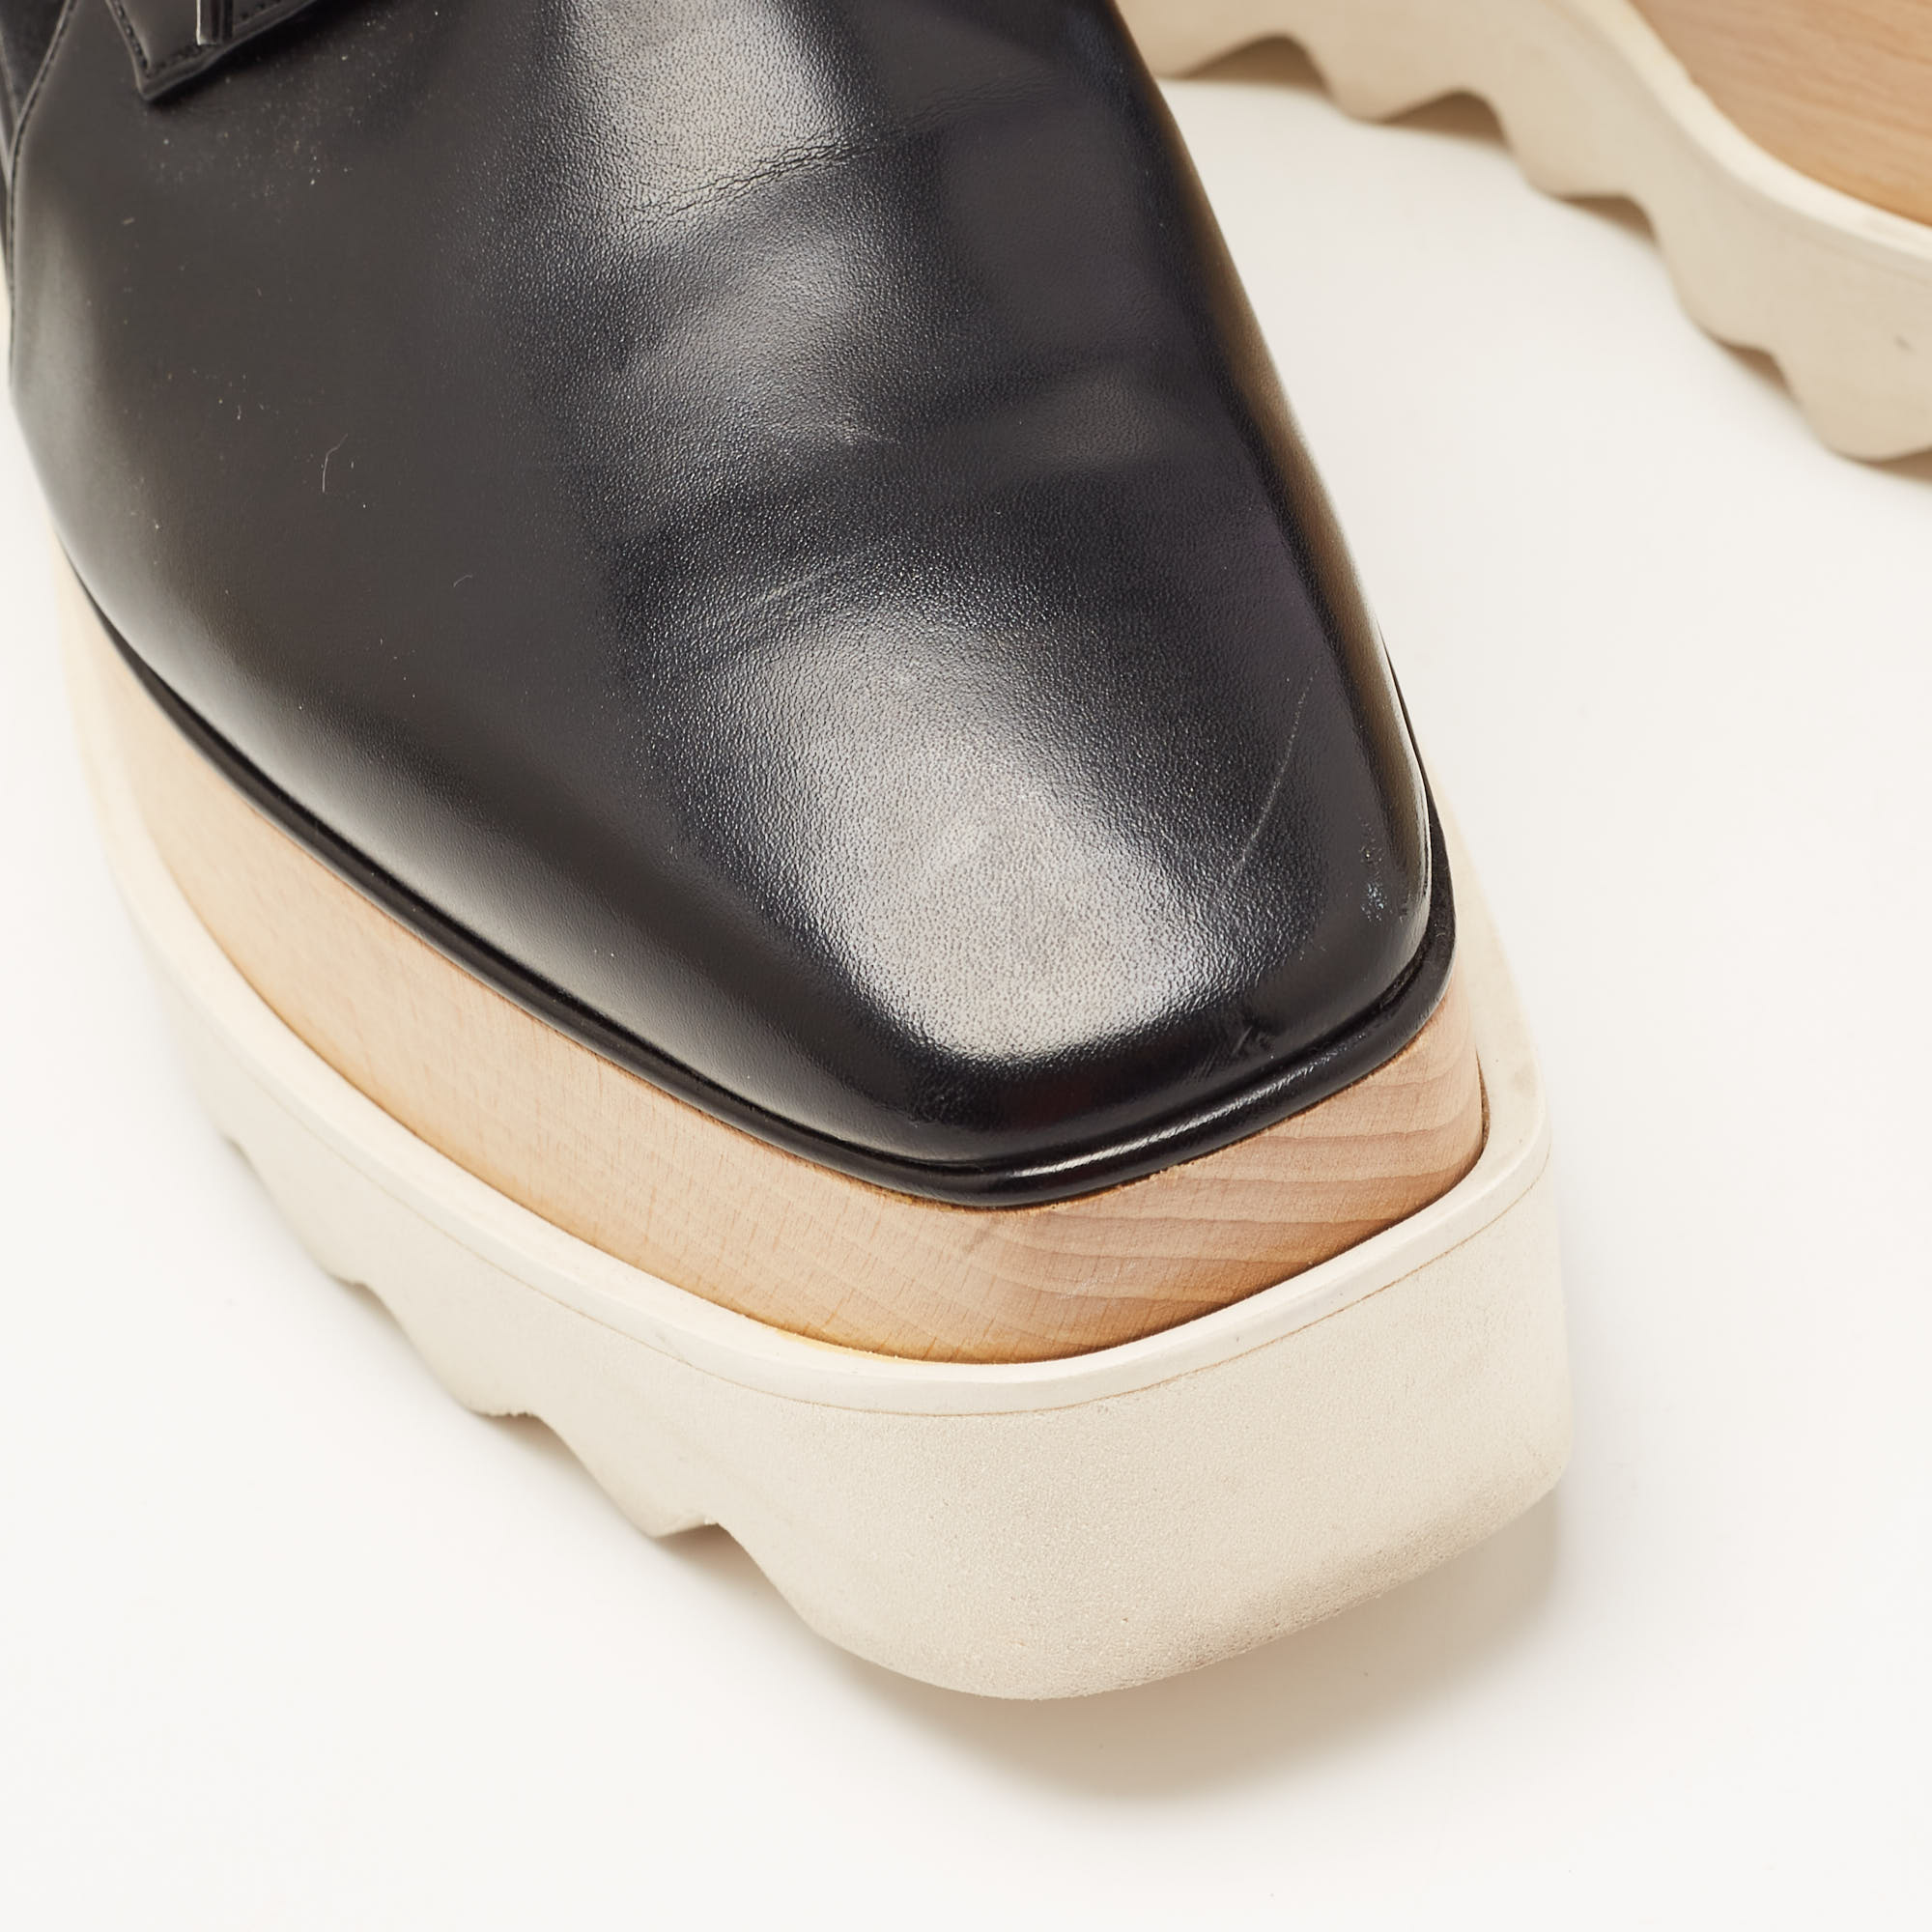 Stella McCartney Black Faux Leather Elyse Sneakers Size 36.5